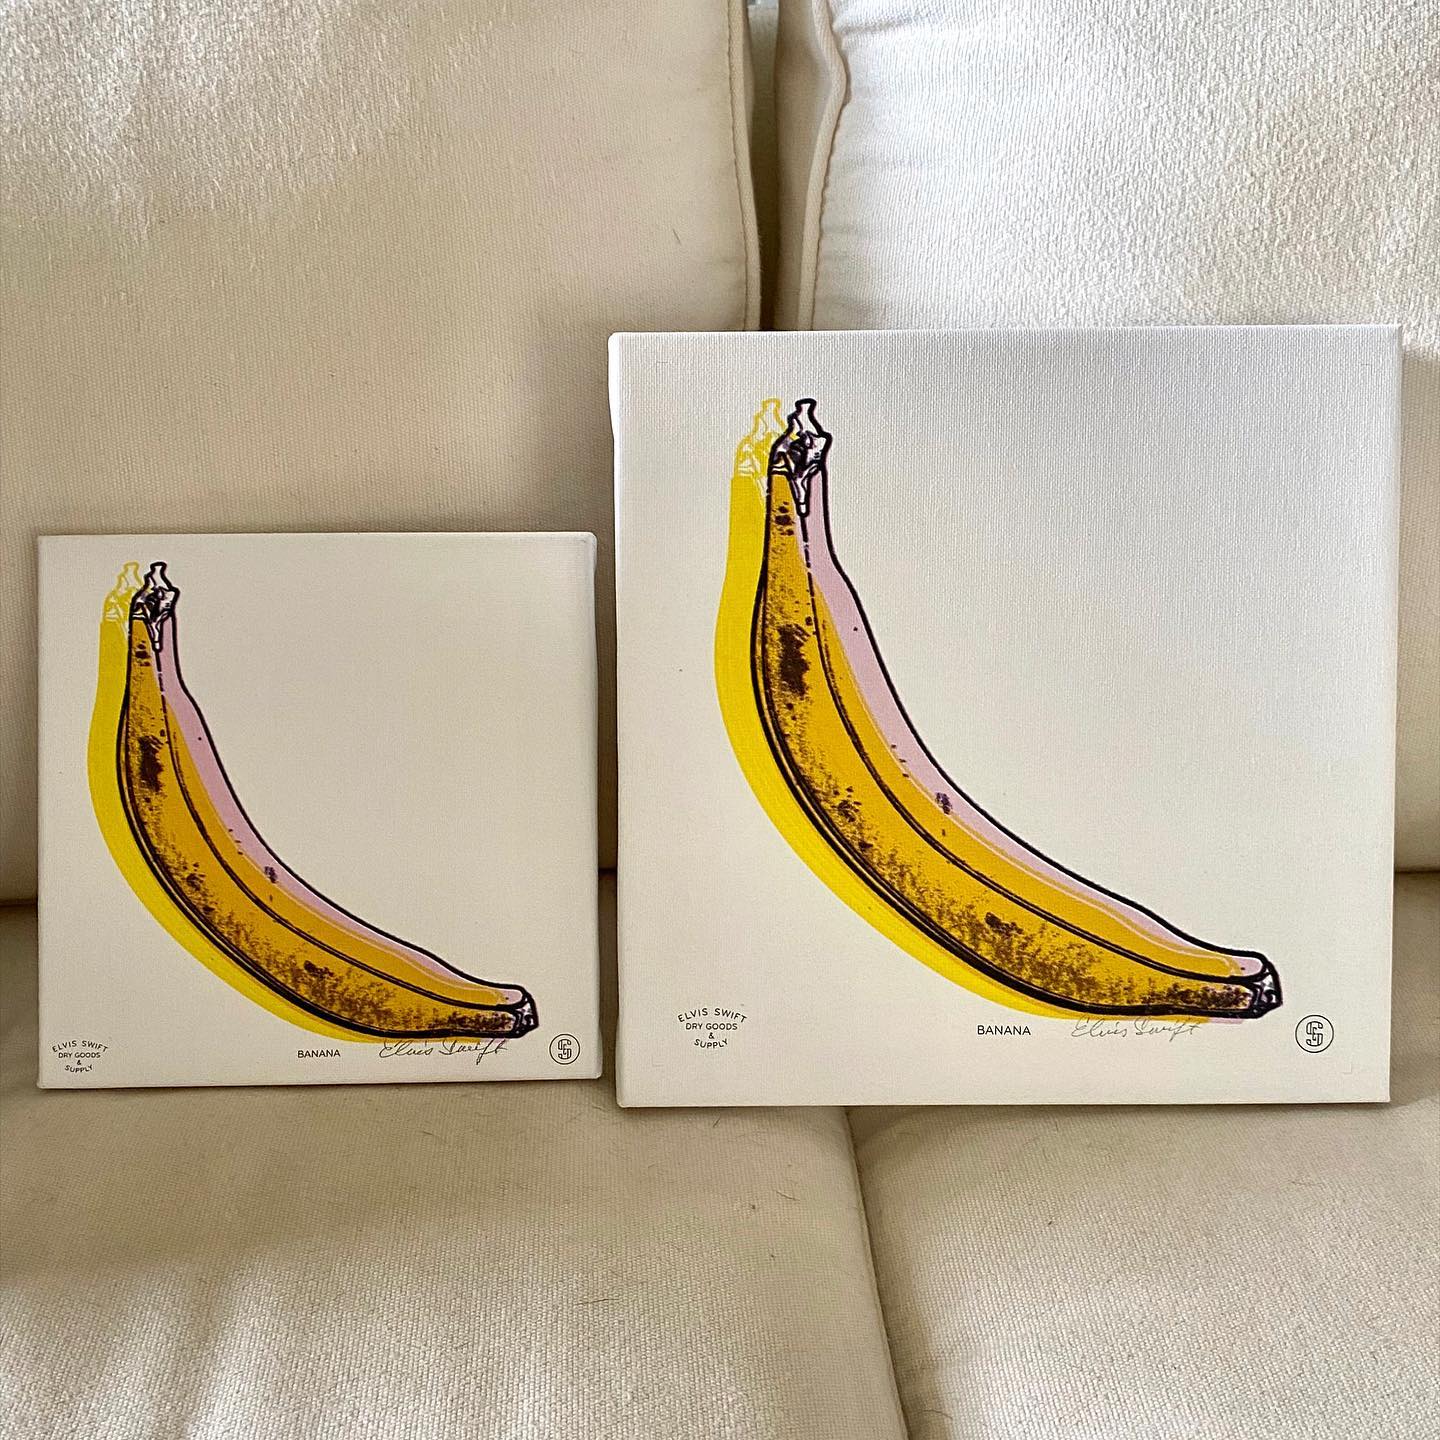 Bananas - 8x8 inch, 11x11 inch. Elvis Swift #bananas #bananaprint #bananaart #popart #yellowbanana #elvisswiftdrygoods #elvisswift #naplesartdistrict #bayshoreartsdistrict #naplesart #naplesfl